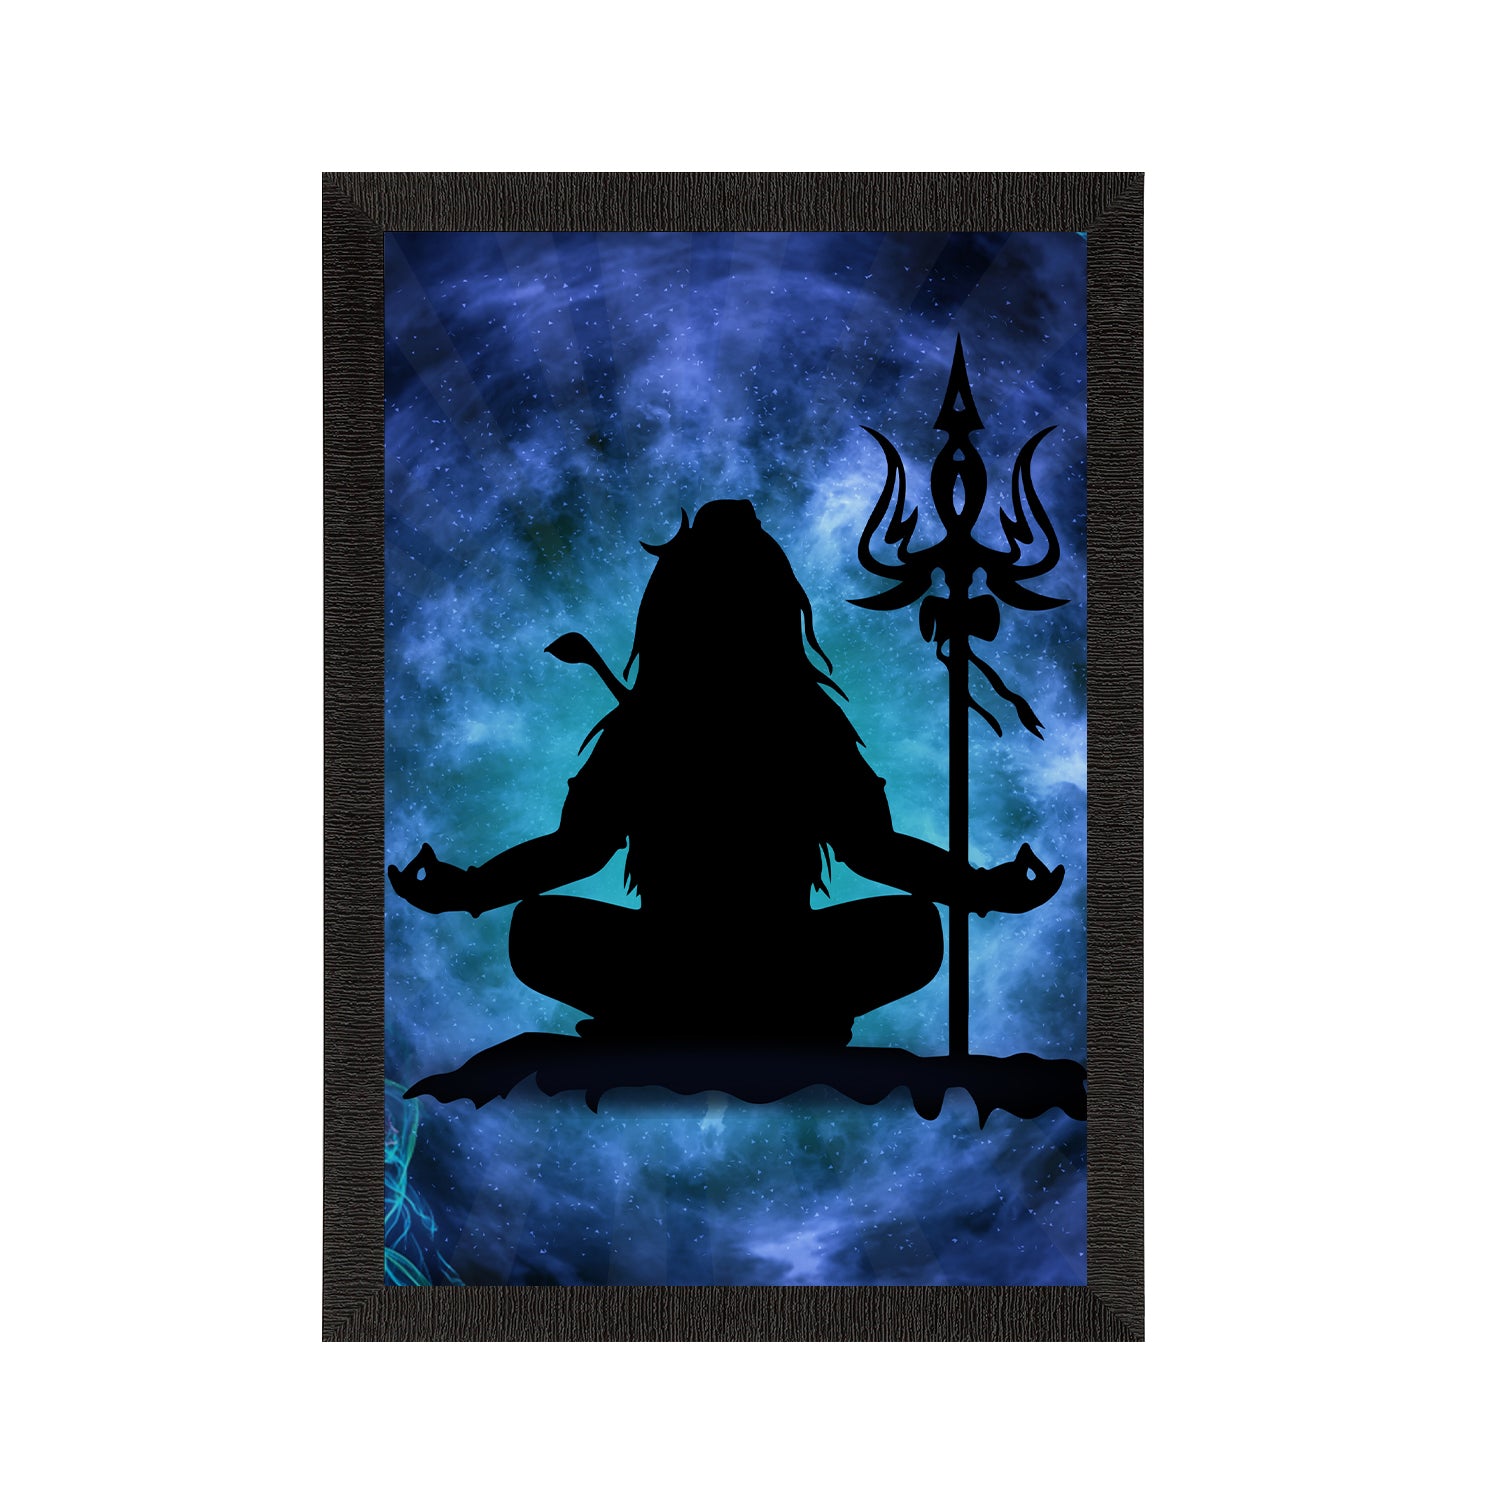 Lord Shiva Painting Digital Printed Religious Wall Art